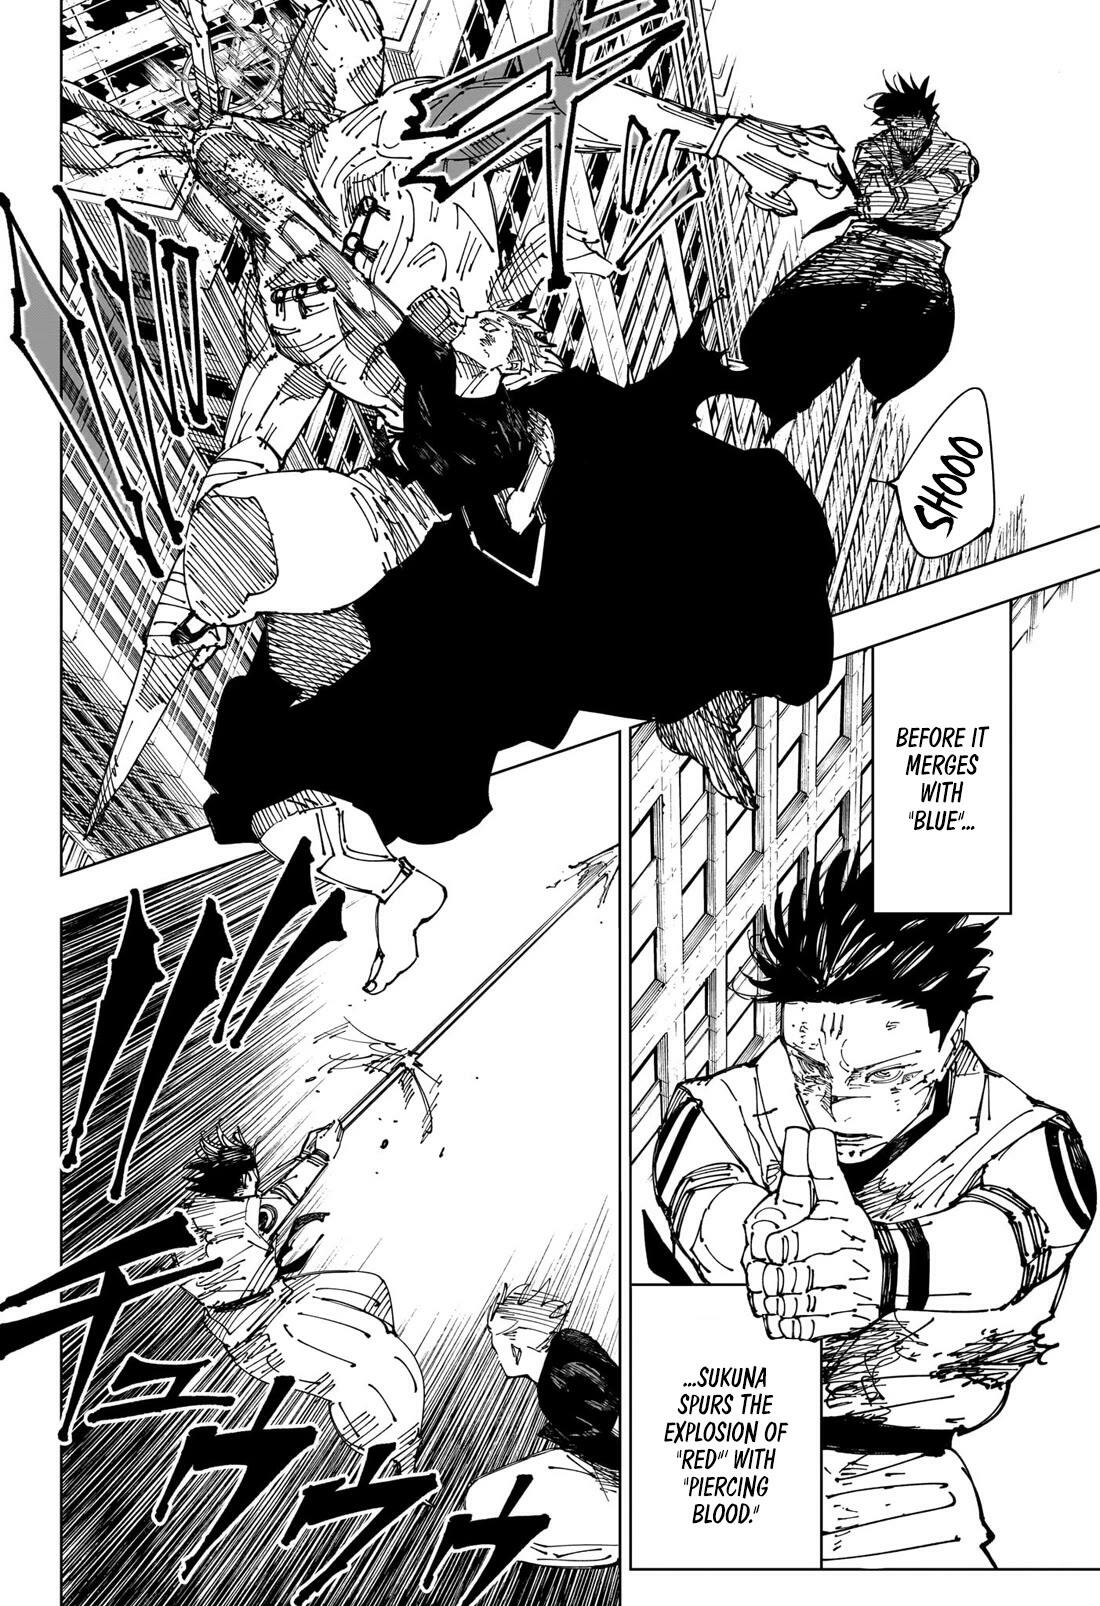 Jujutsu Kaisen Chapter 235: The Decisive Battle In The Uninhabited, Demon-Infested Shinjuku ⑬ page 13 - Mangakakalot